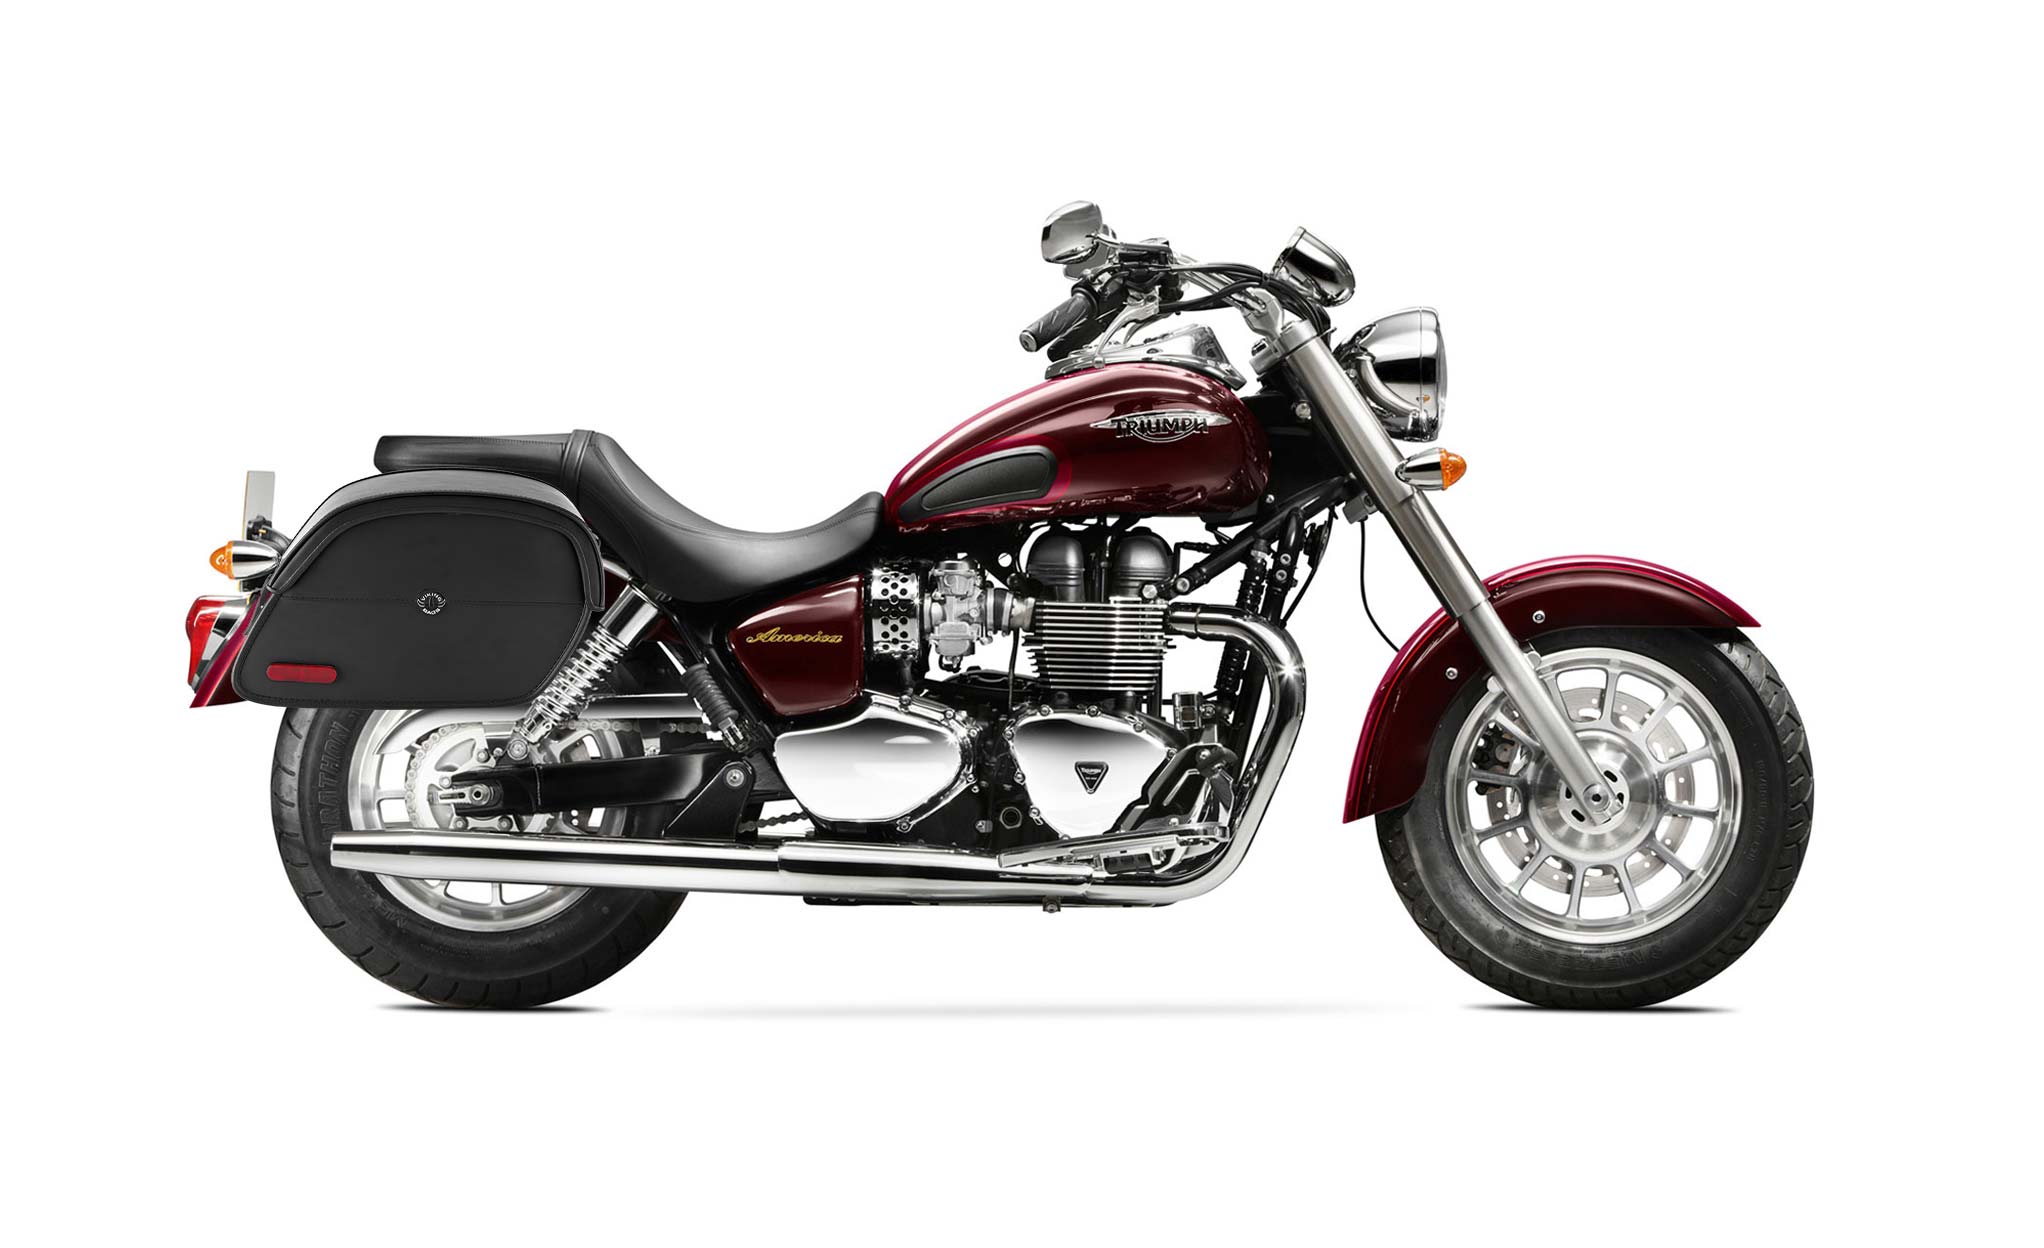 Viking California Large Triumph America Leather Motorcycle Saddlebags on Bike Photo @expand